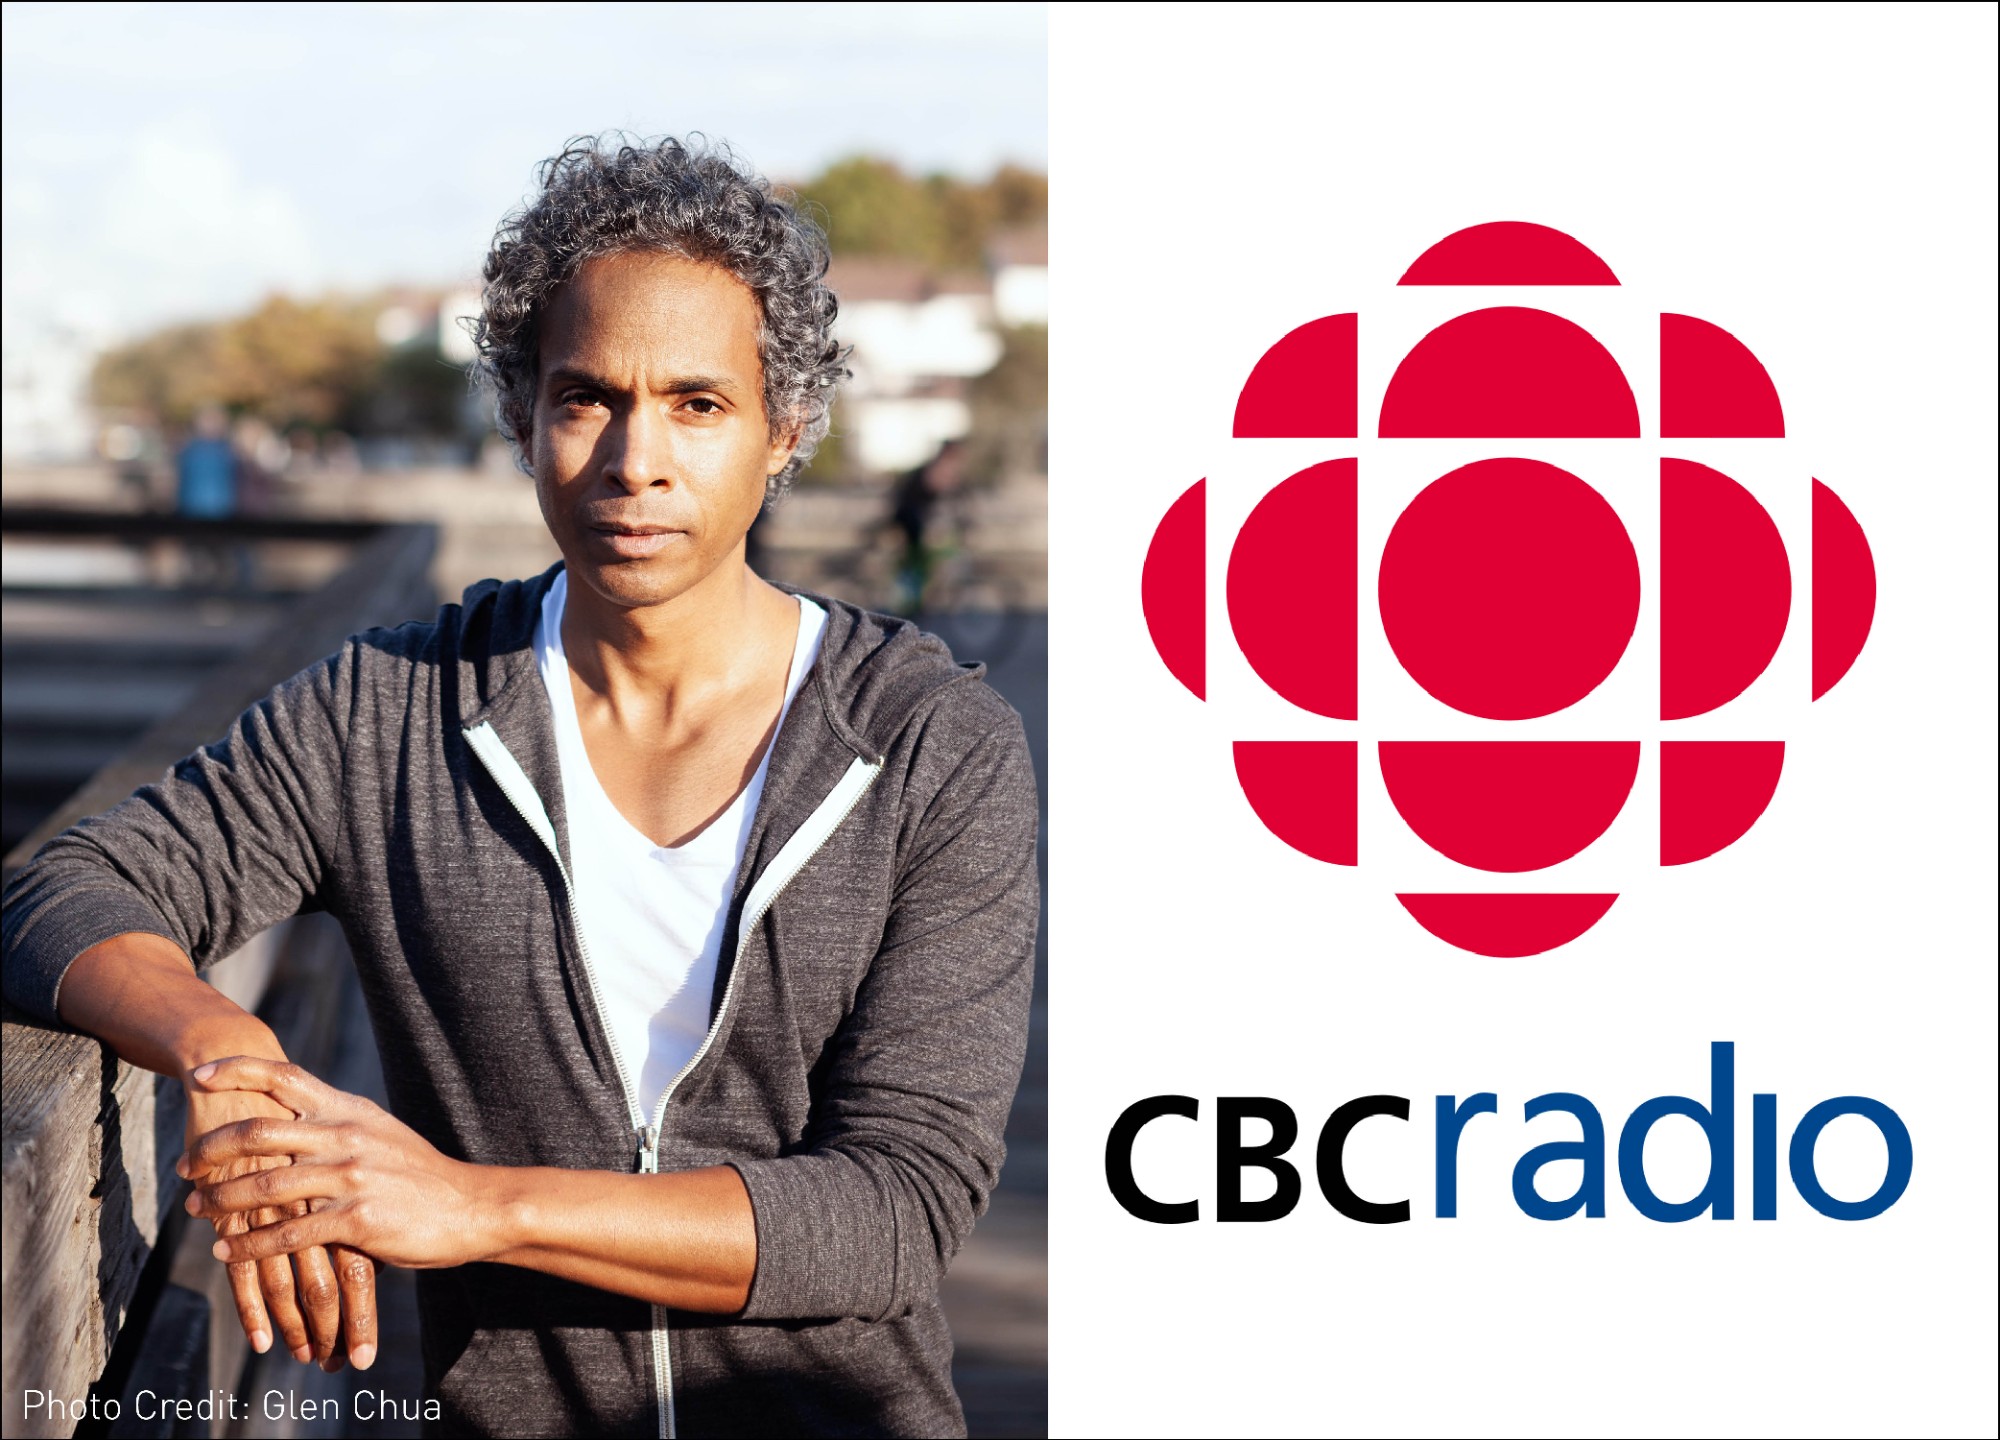 photo of Professor David Chariandy and CBC radio logo